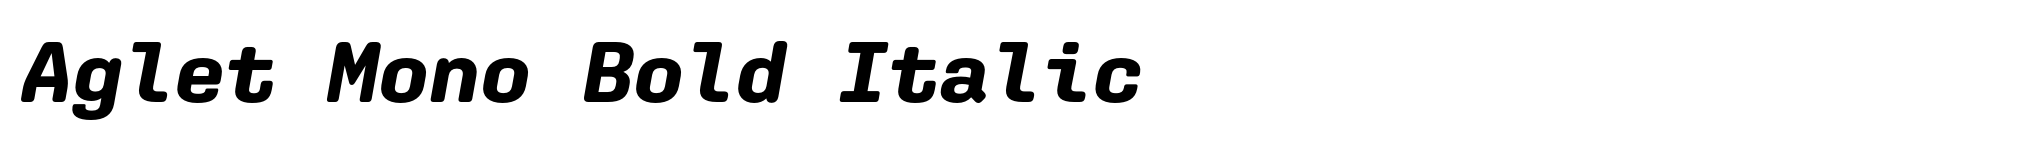 Aglet Mono Bold Italic image